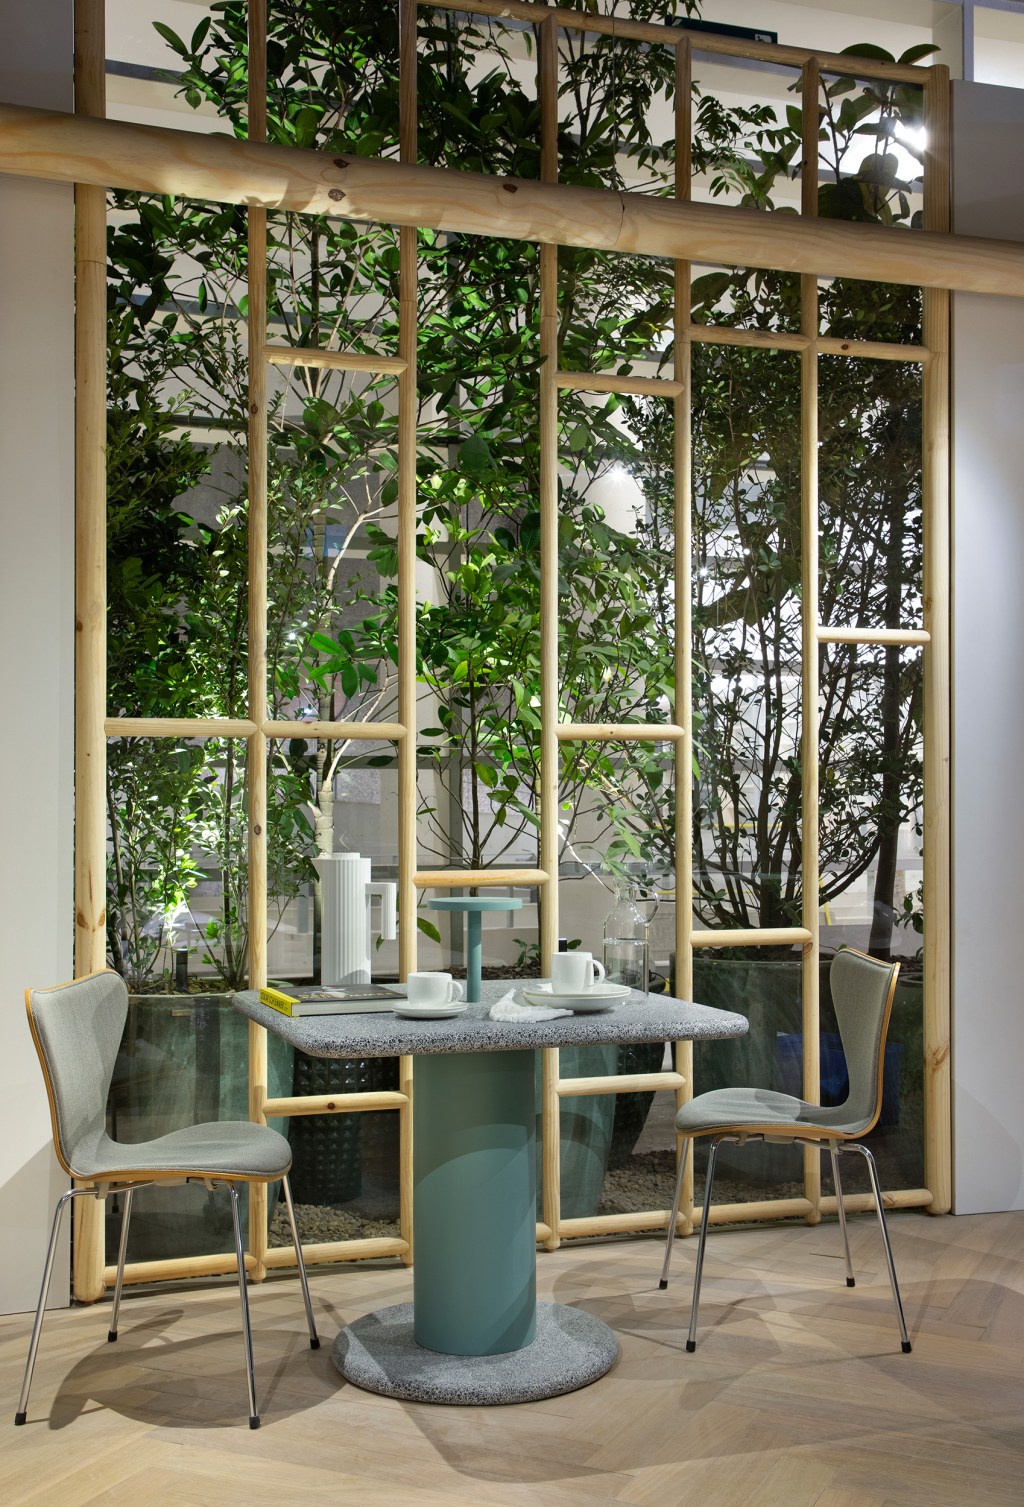 tufi mousse arquitetura studio alfi casacor sao paulo 2022 decor mostra decoracao sala jantar mesa cadeira